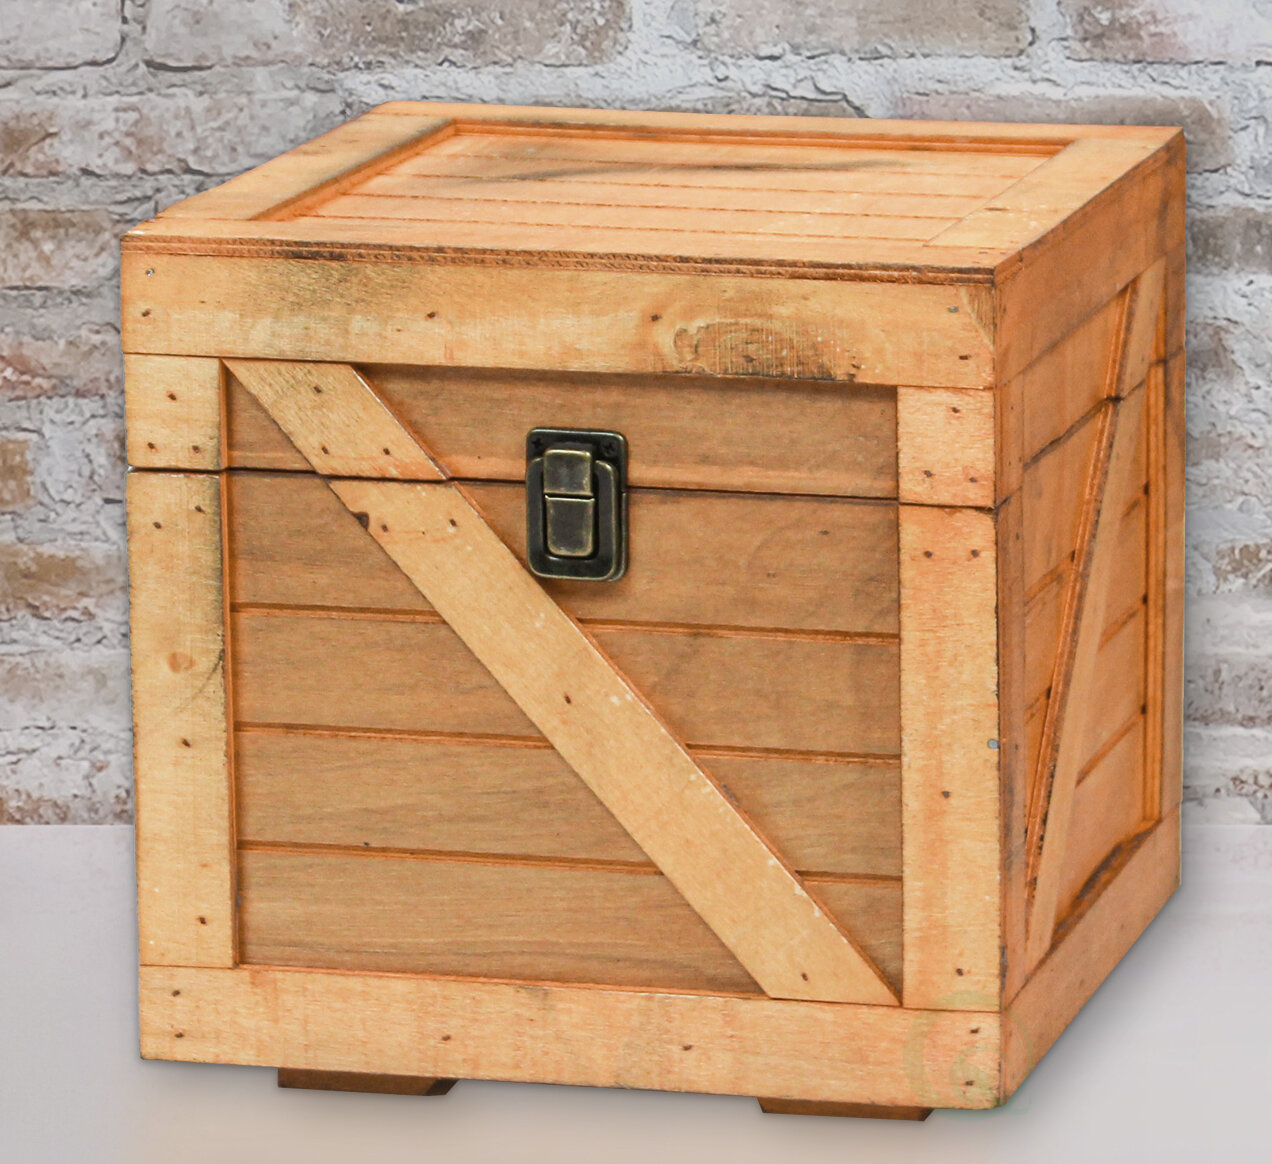 a wooden box